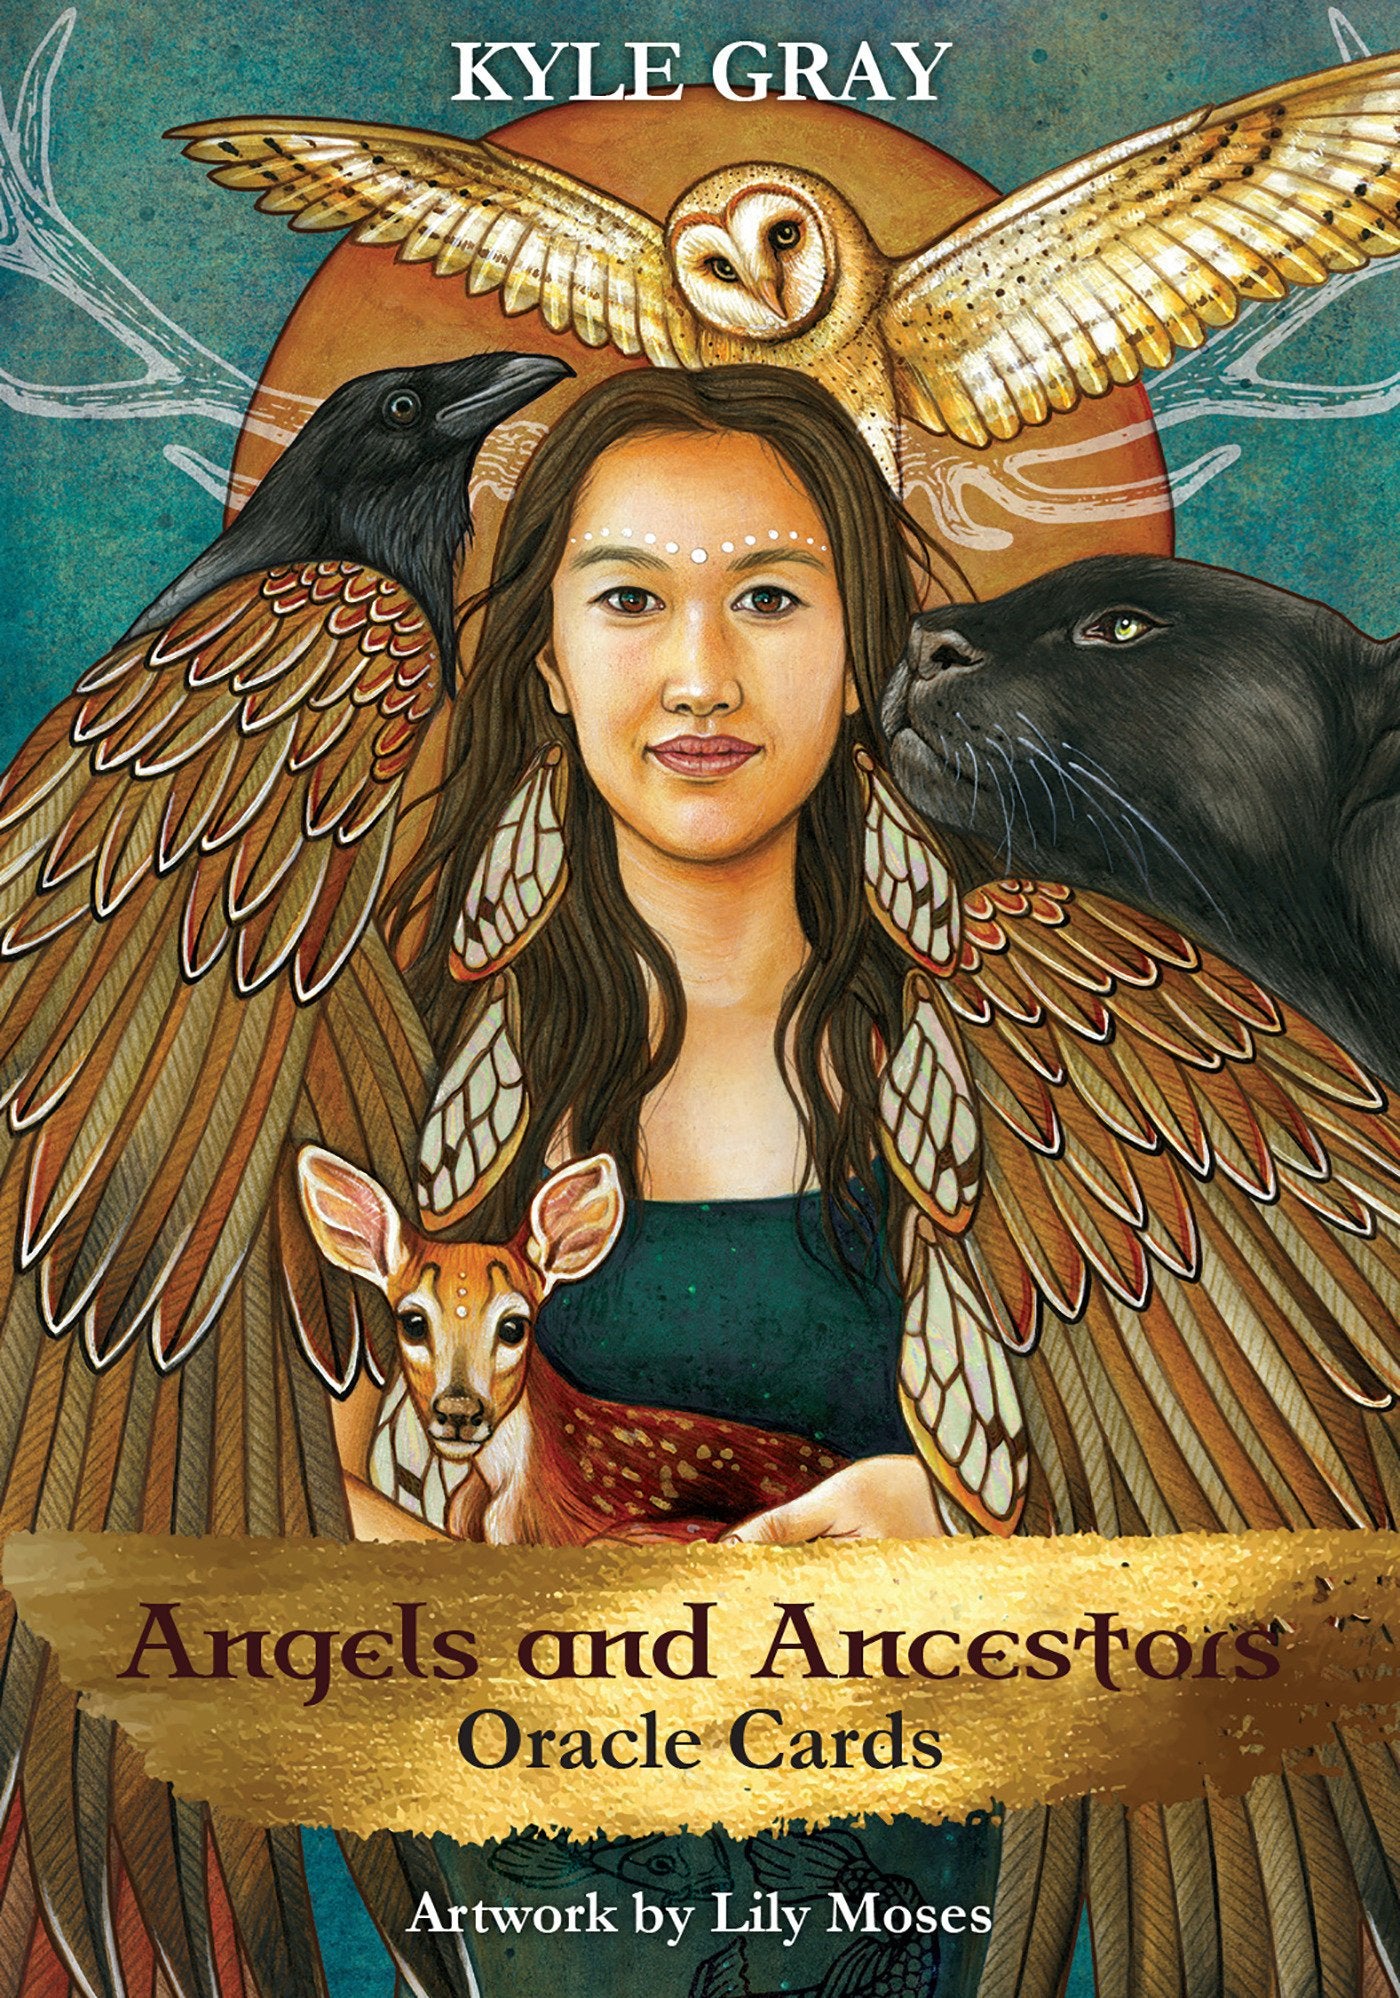 Angels & Ancestors Cards || Kyle Gray